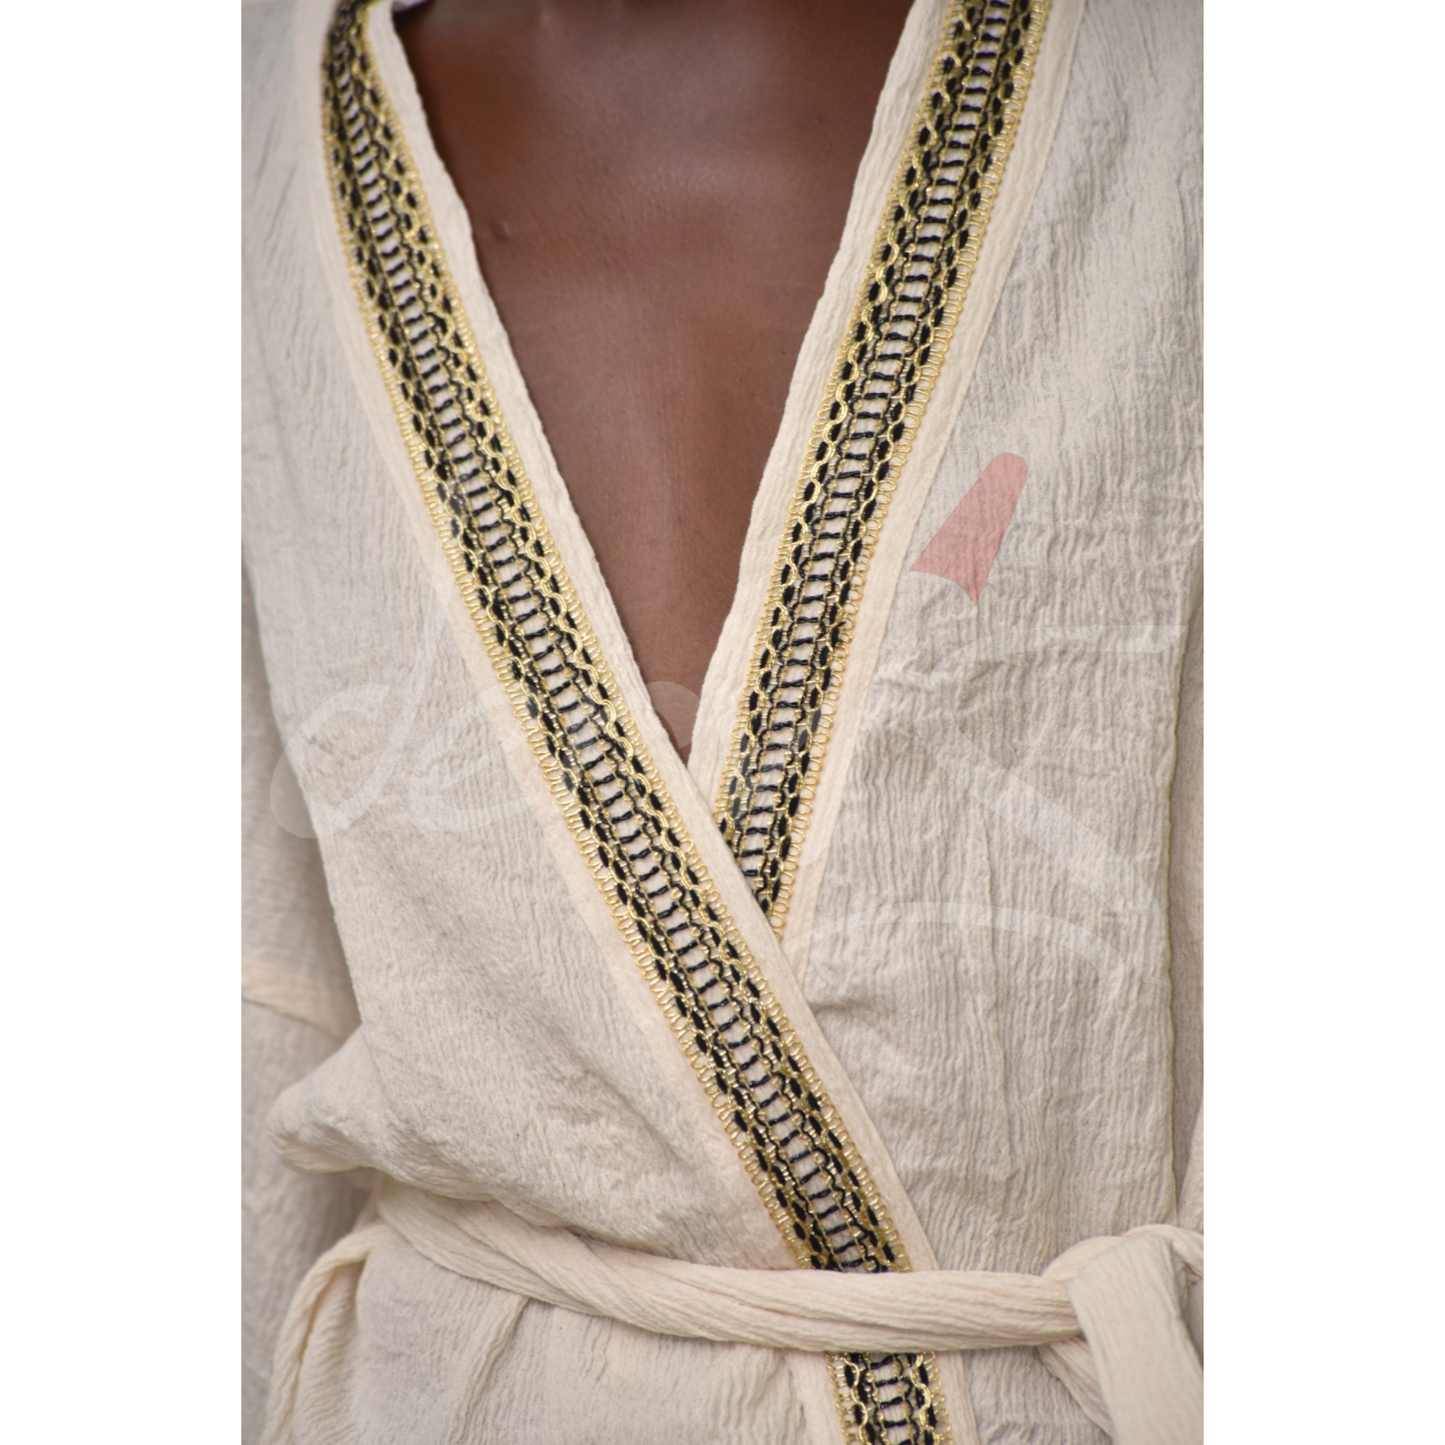 Authentic Turkish Hand-Woven Kimono: Exquisite Crimped Yarn Fabric